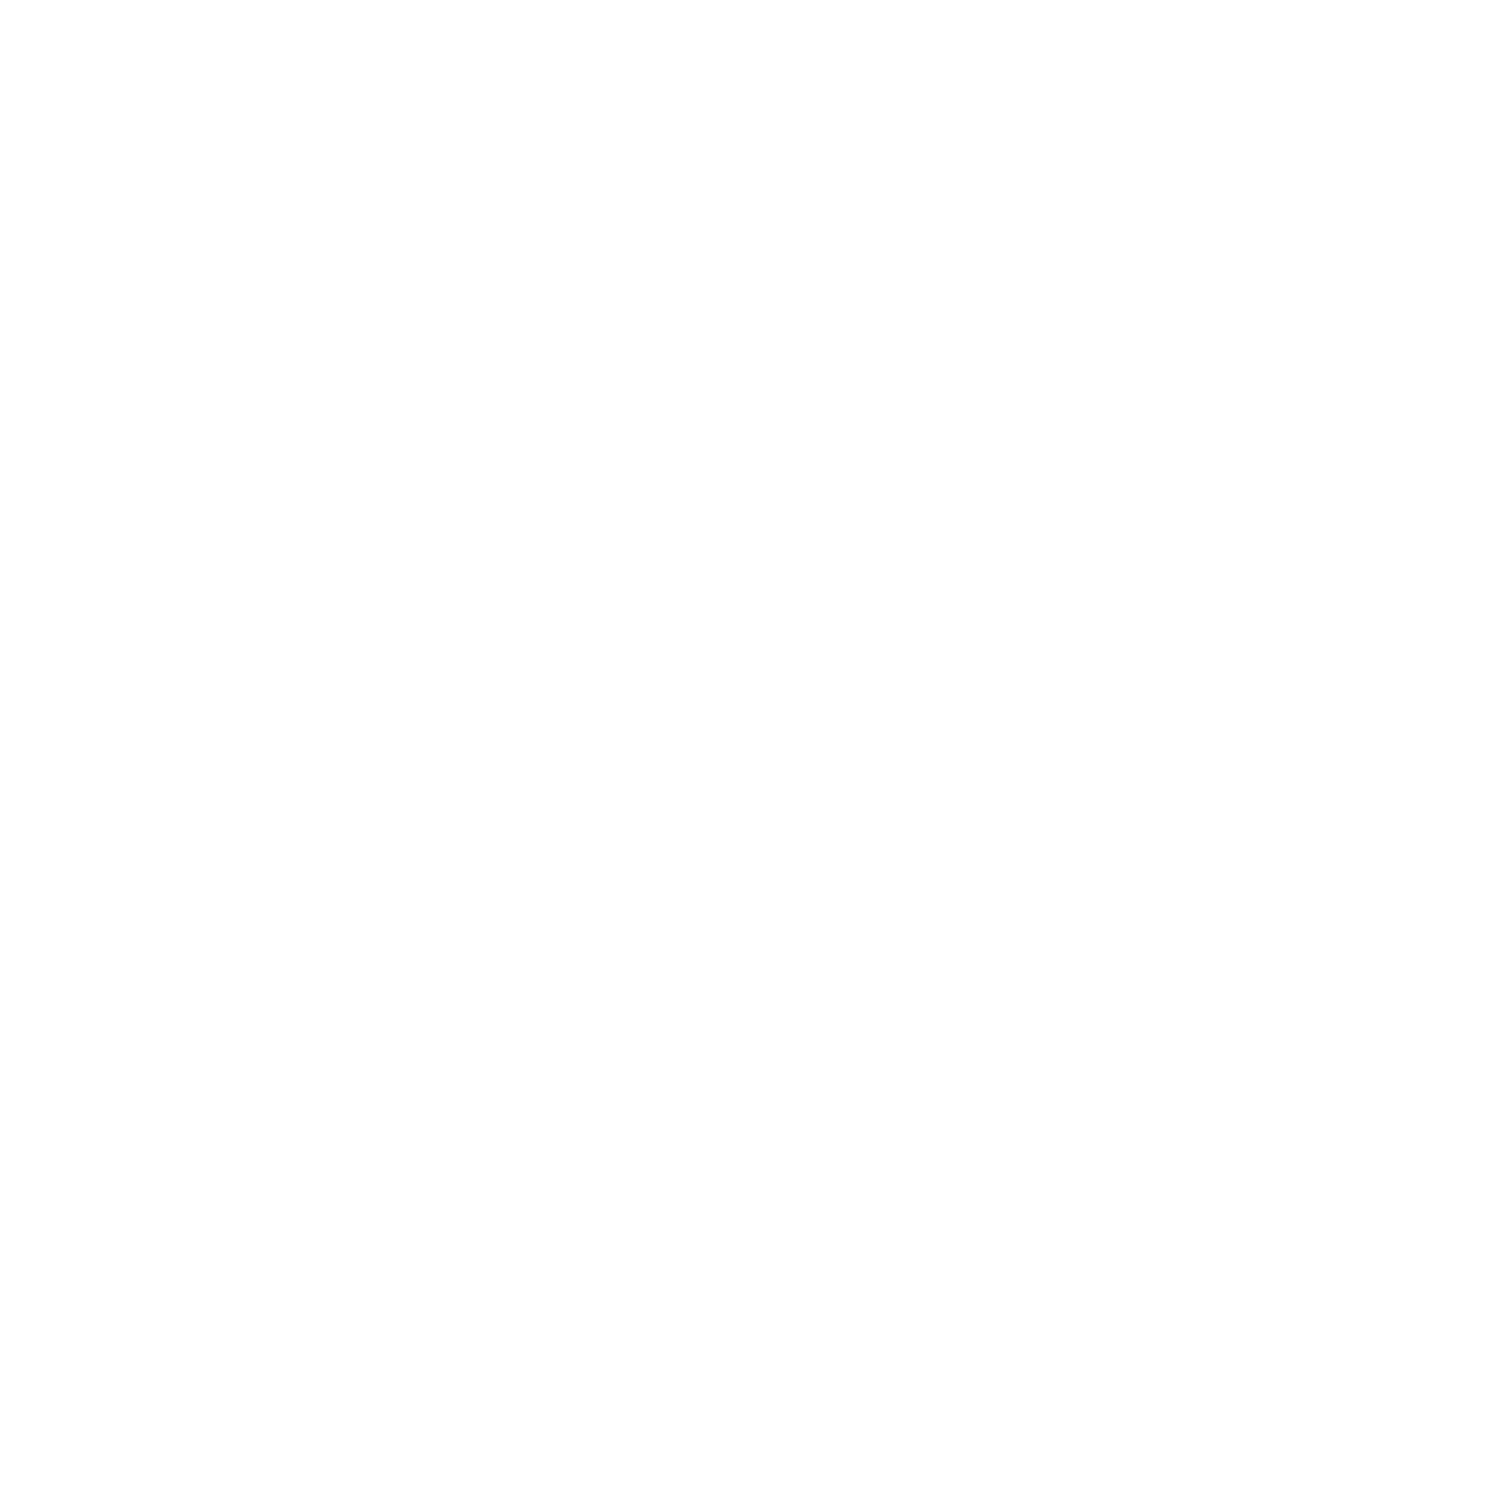 Simmons 3